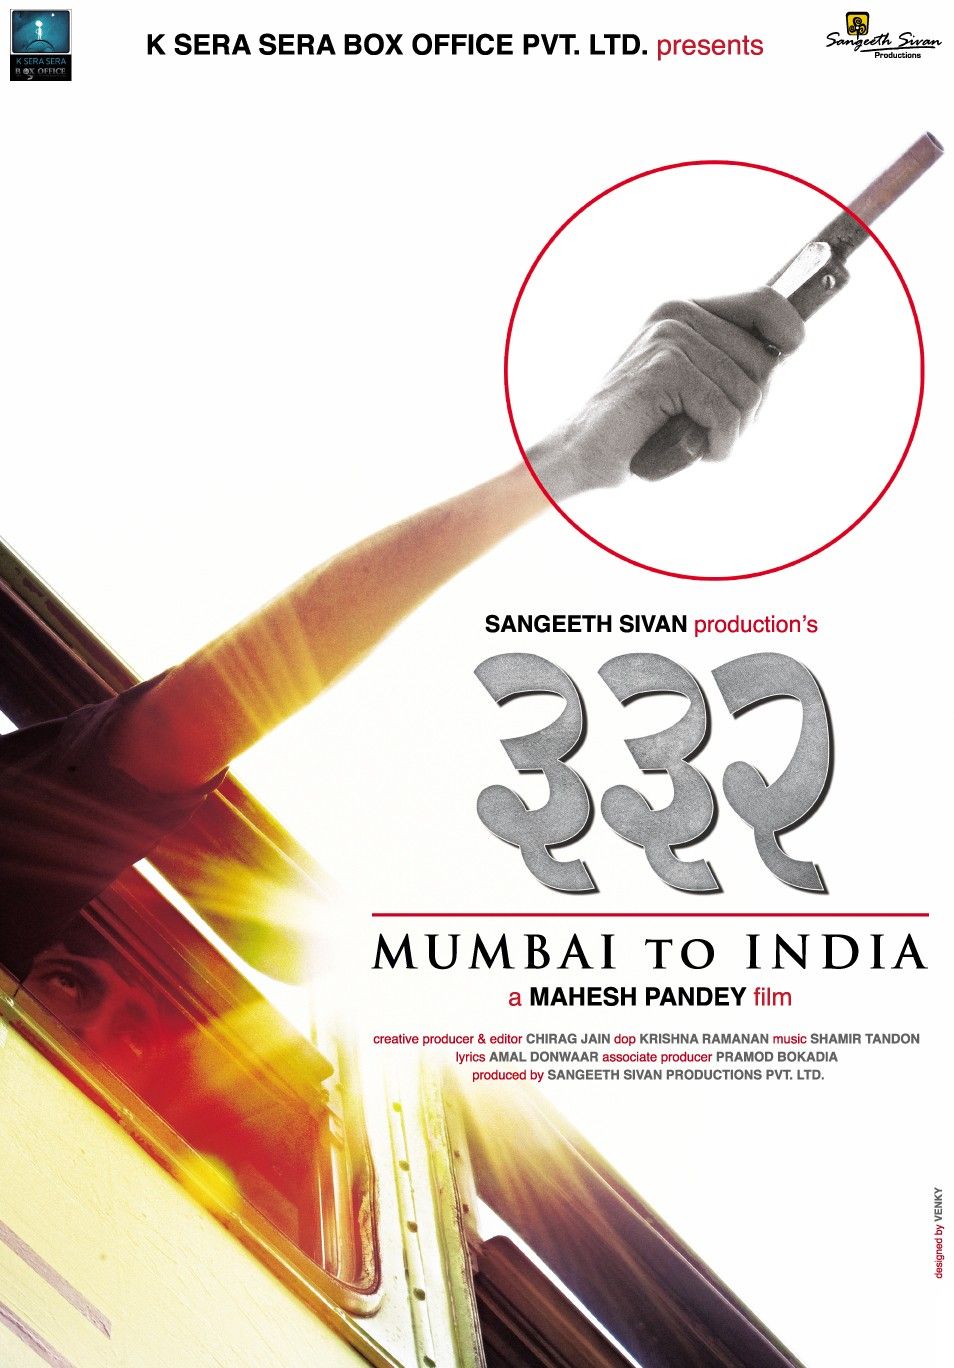 Extra Large Movie Poster Image for 332: Mumbai to India (#4 of 6)